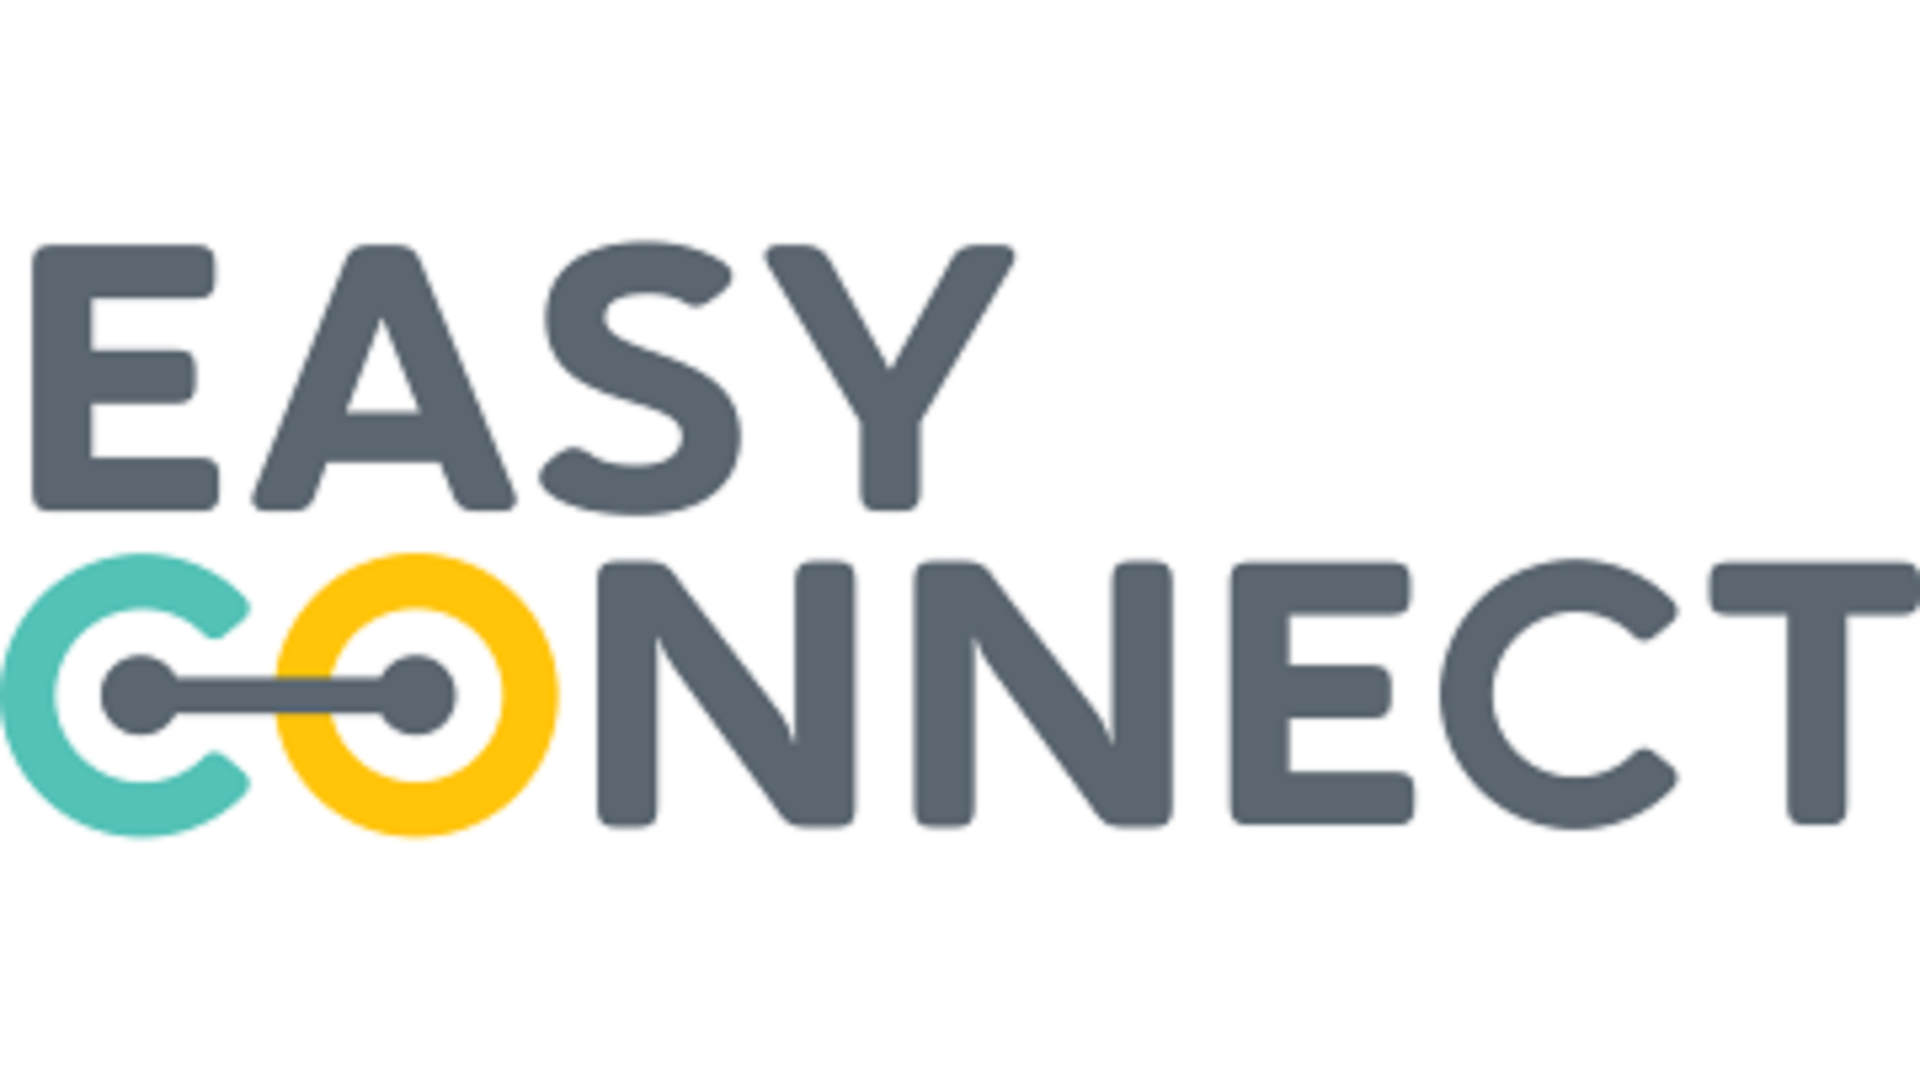 Easyconnect logo